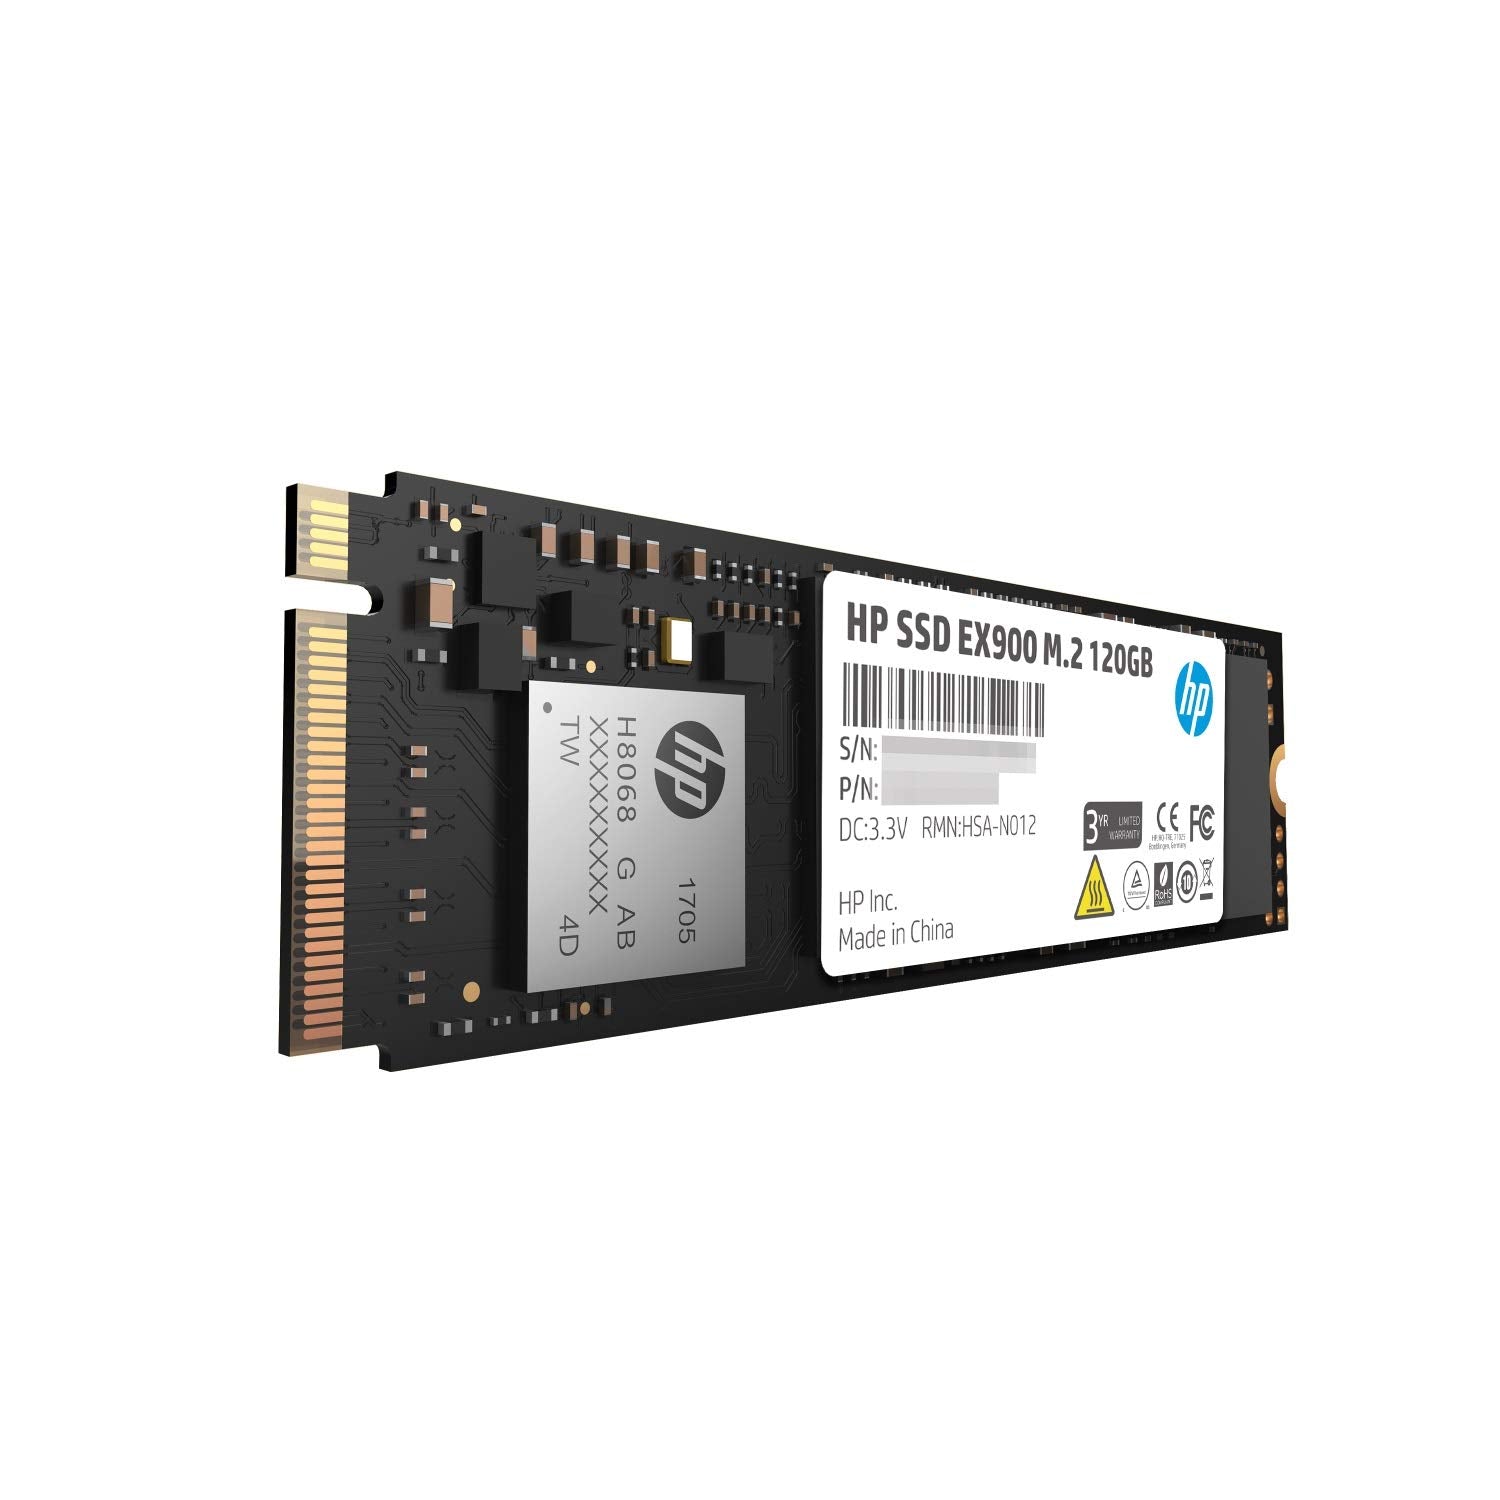 HP SSD EX900 M.2 120GB PCIe 3.0 x4 NVMe 3D TLC NAND Internal Solid State Drive (2YY42AA)